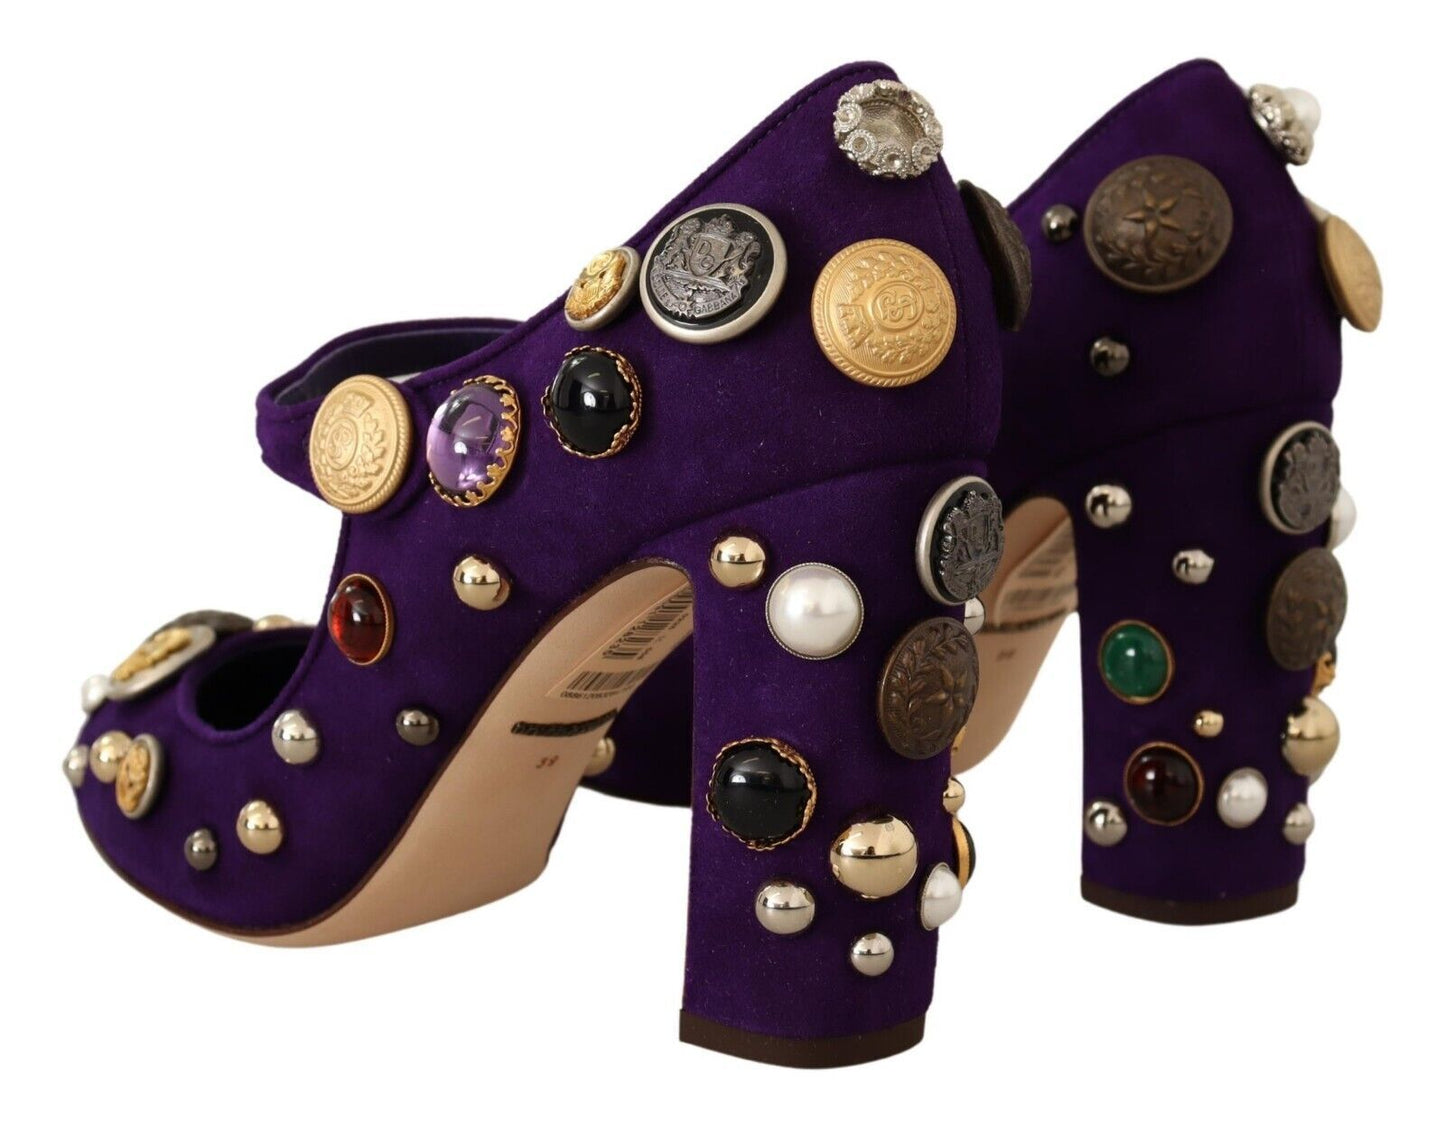 Dolce & Gabbana Purpur Wildlederpumpe Mary Jane Schuhe